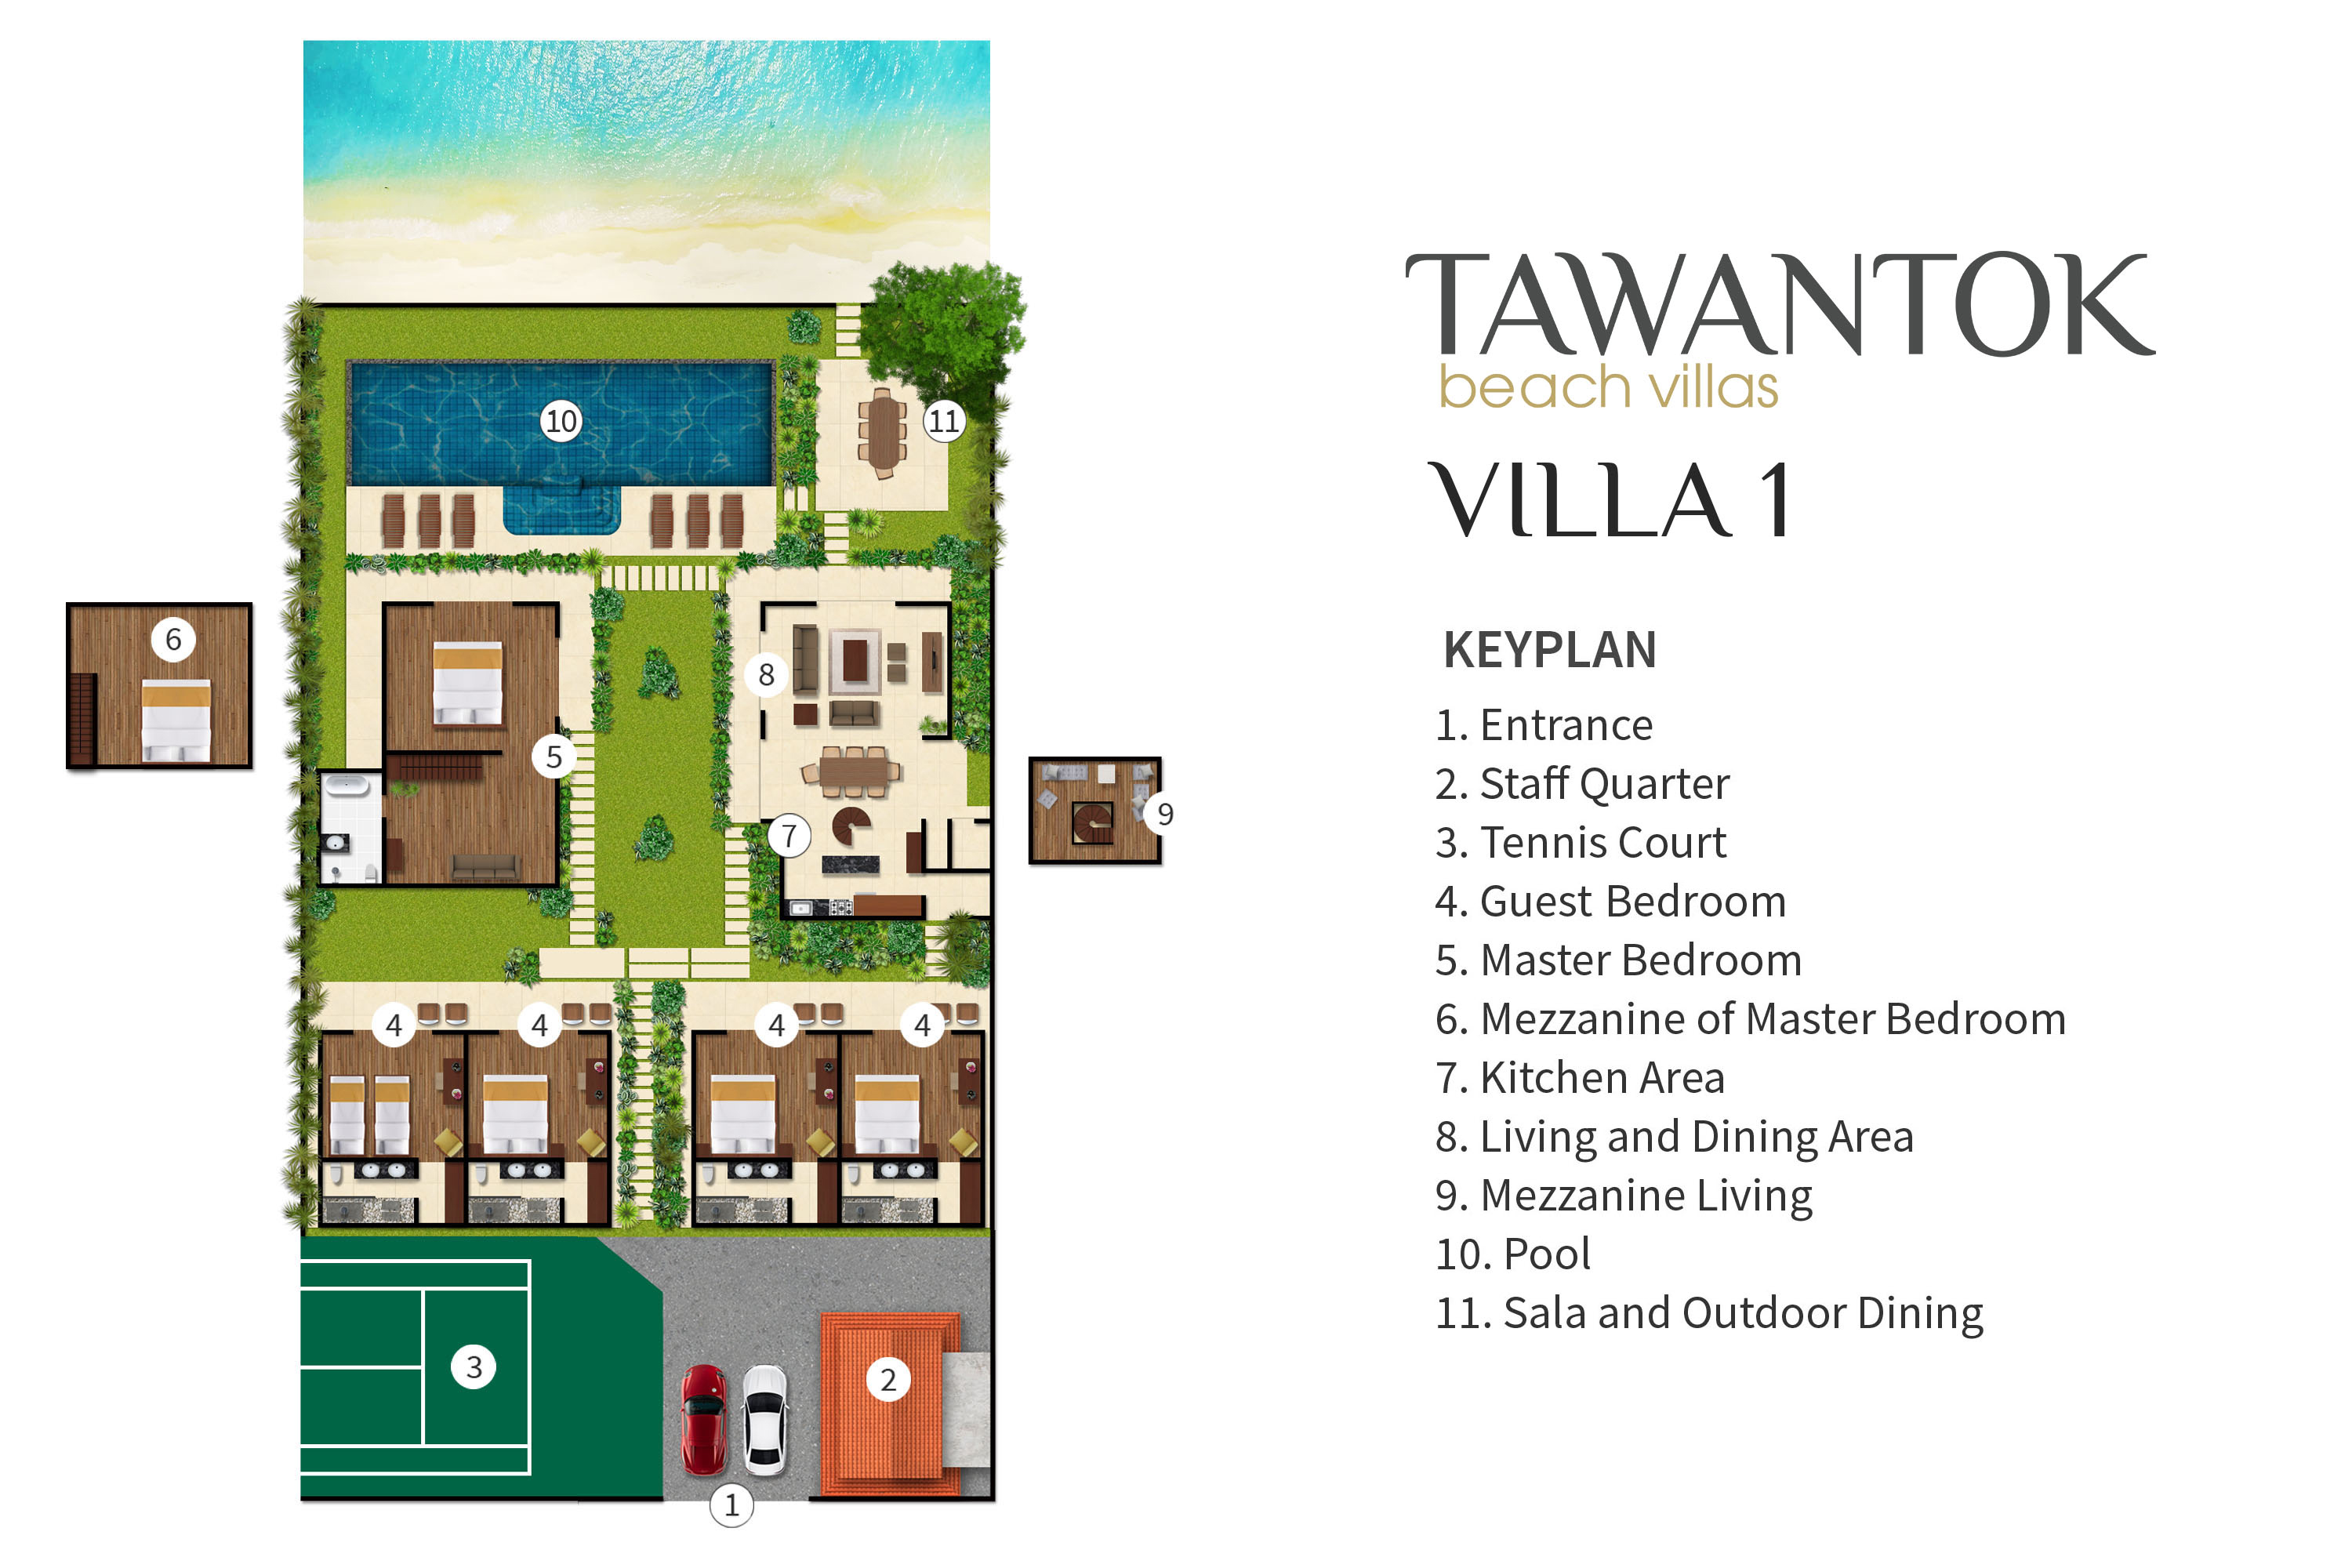 Tawantok Beach Villas - Villa 1 - Floorplan